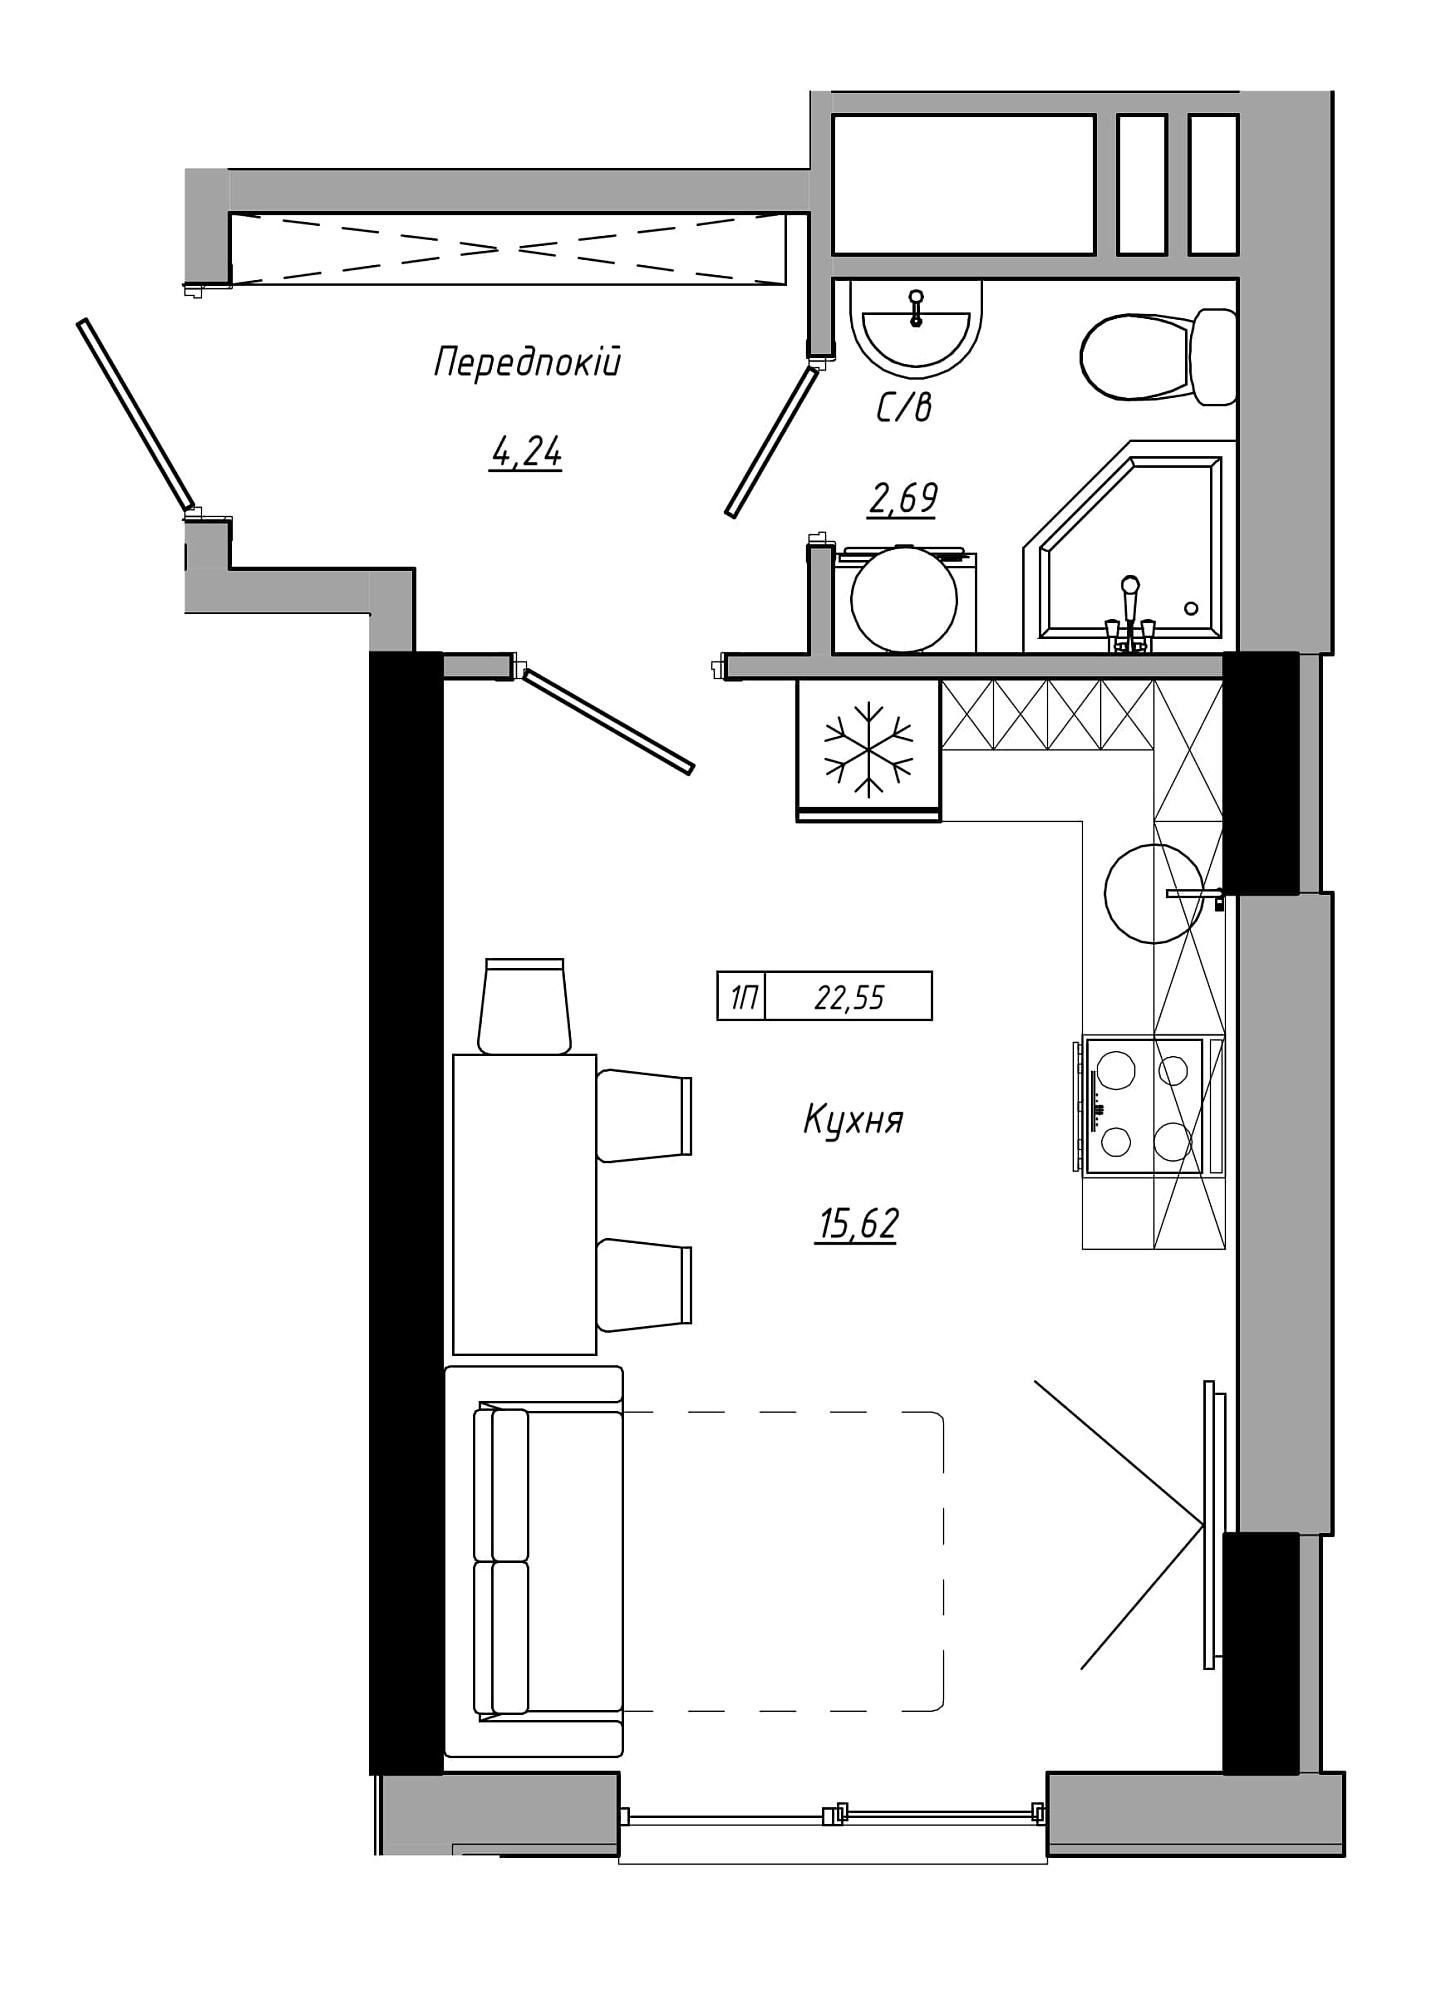 Planning Smart flats area 22.55m2, AB-21-07/00018.